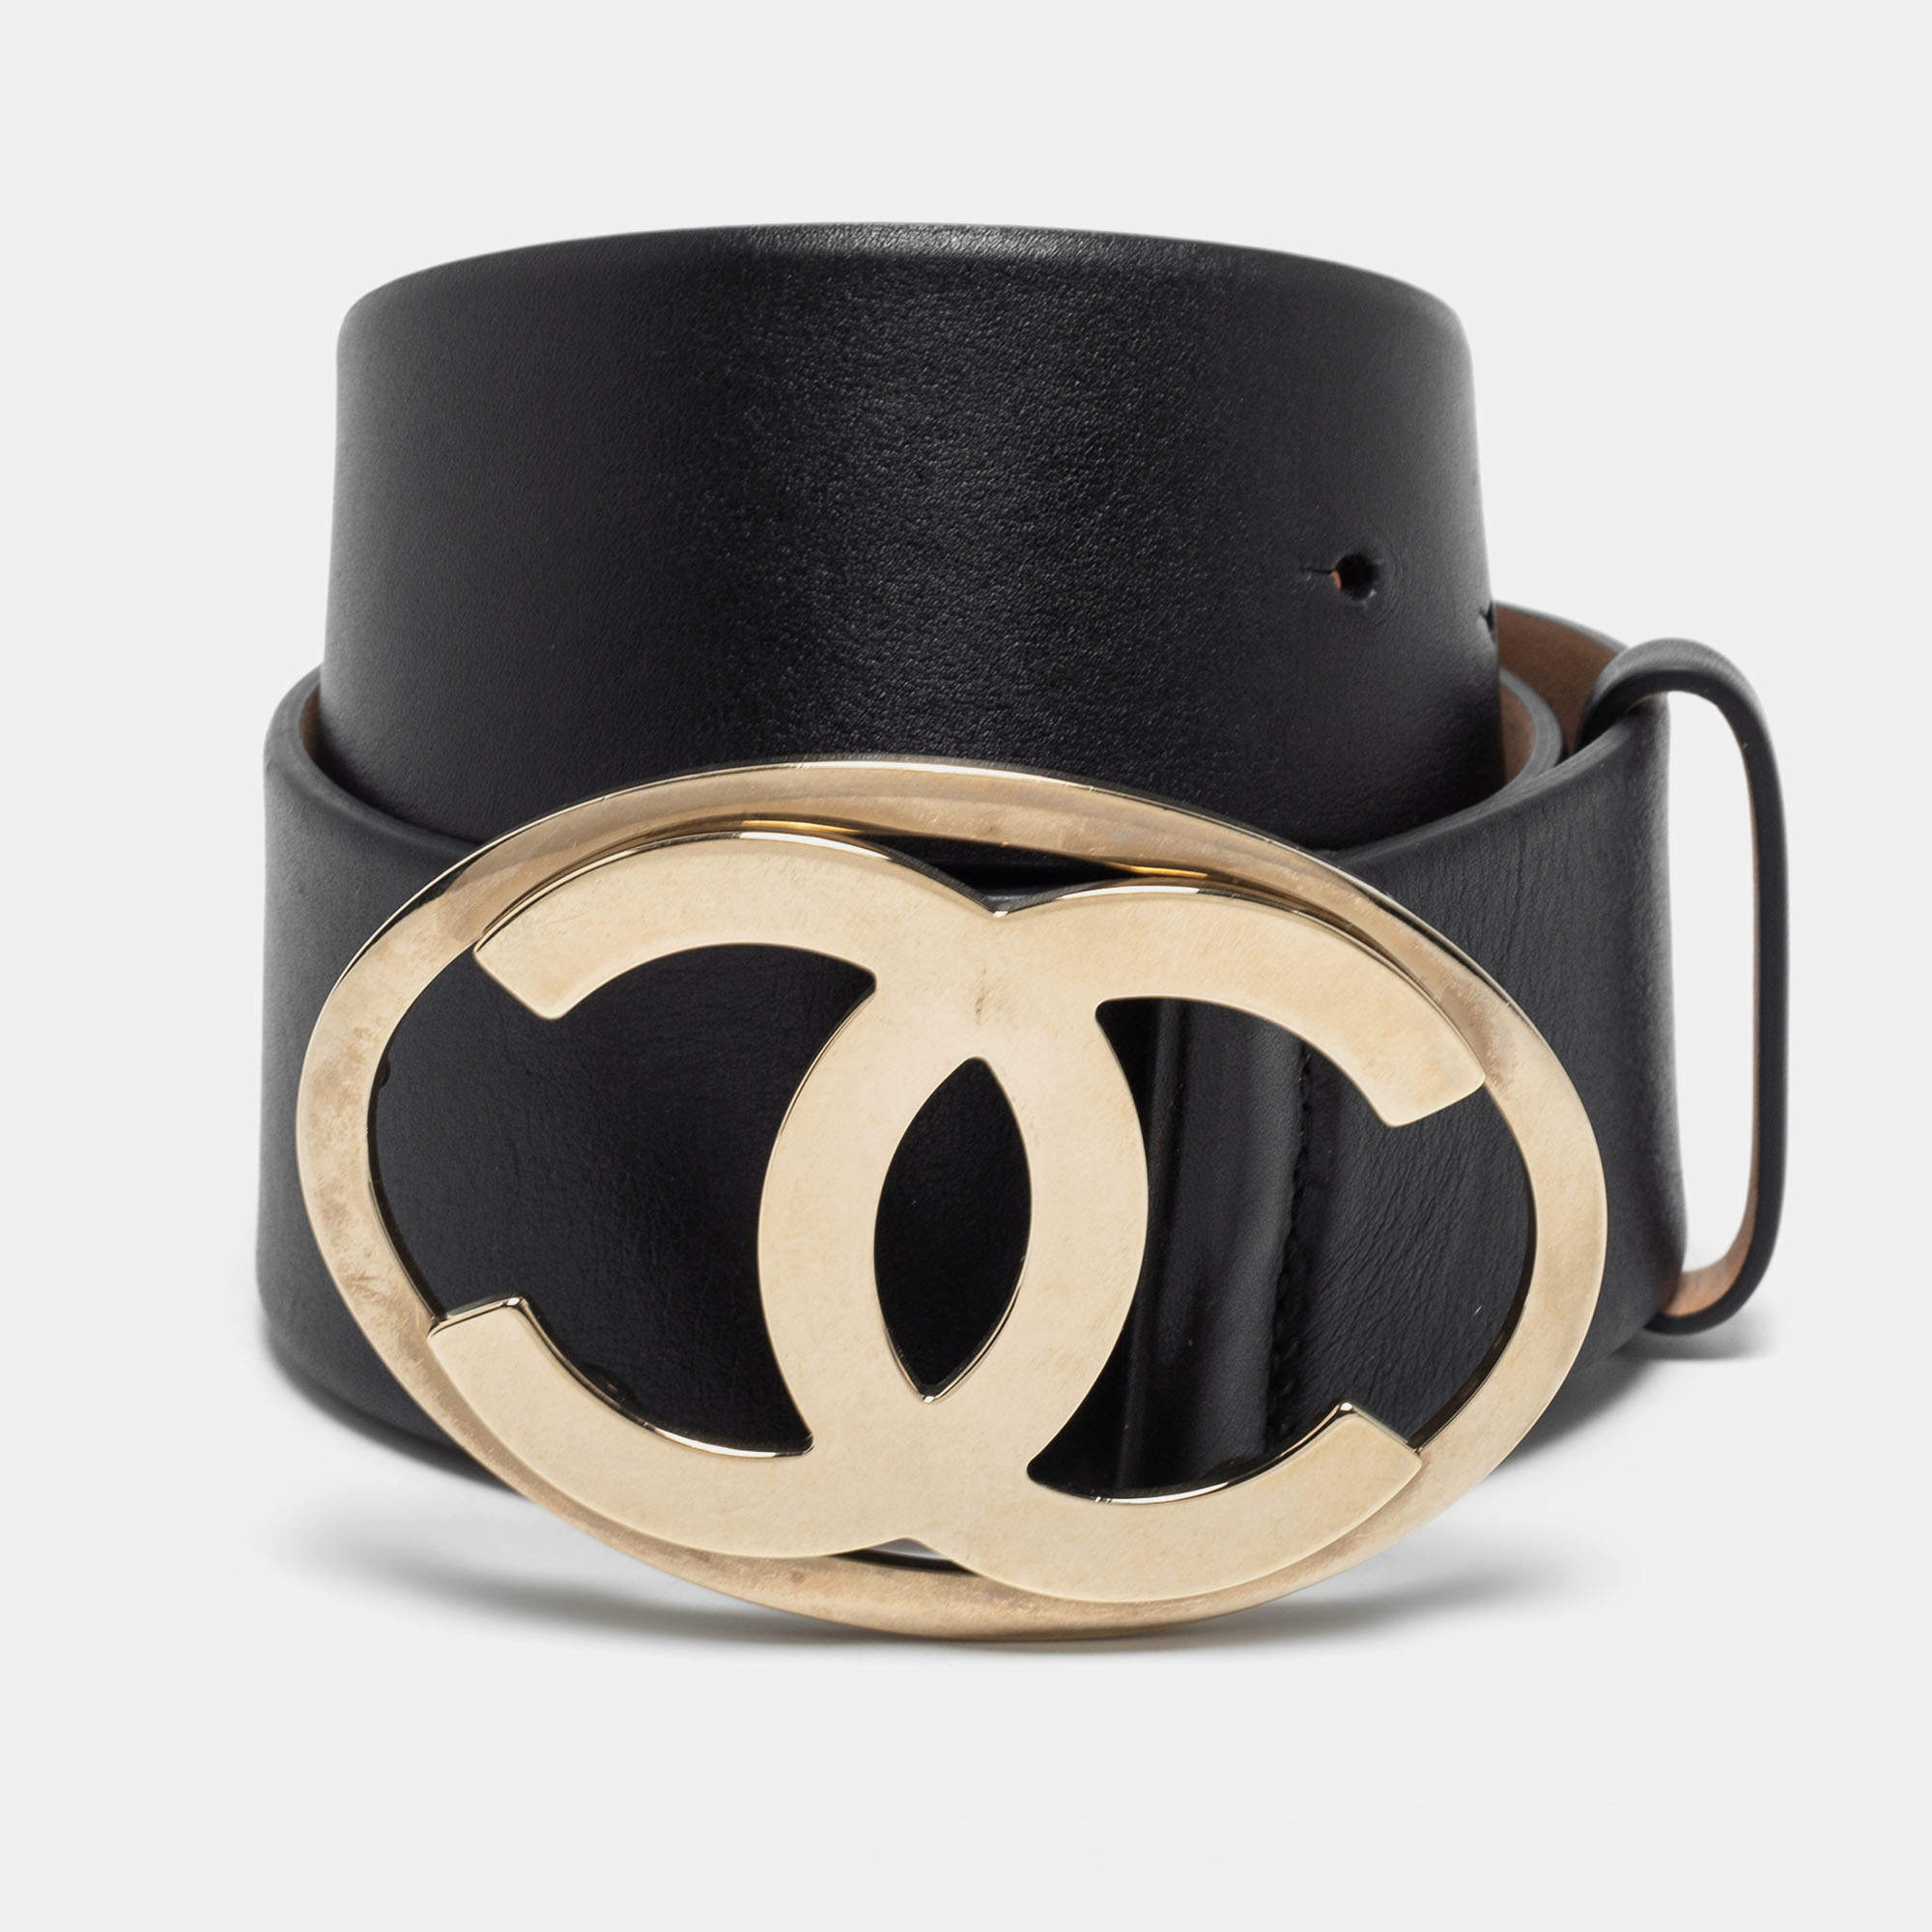 Chanel Black Leather CC Buckle Belt 75CM Chanel